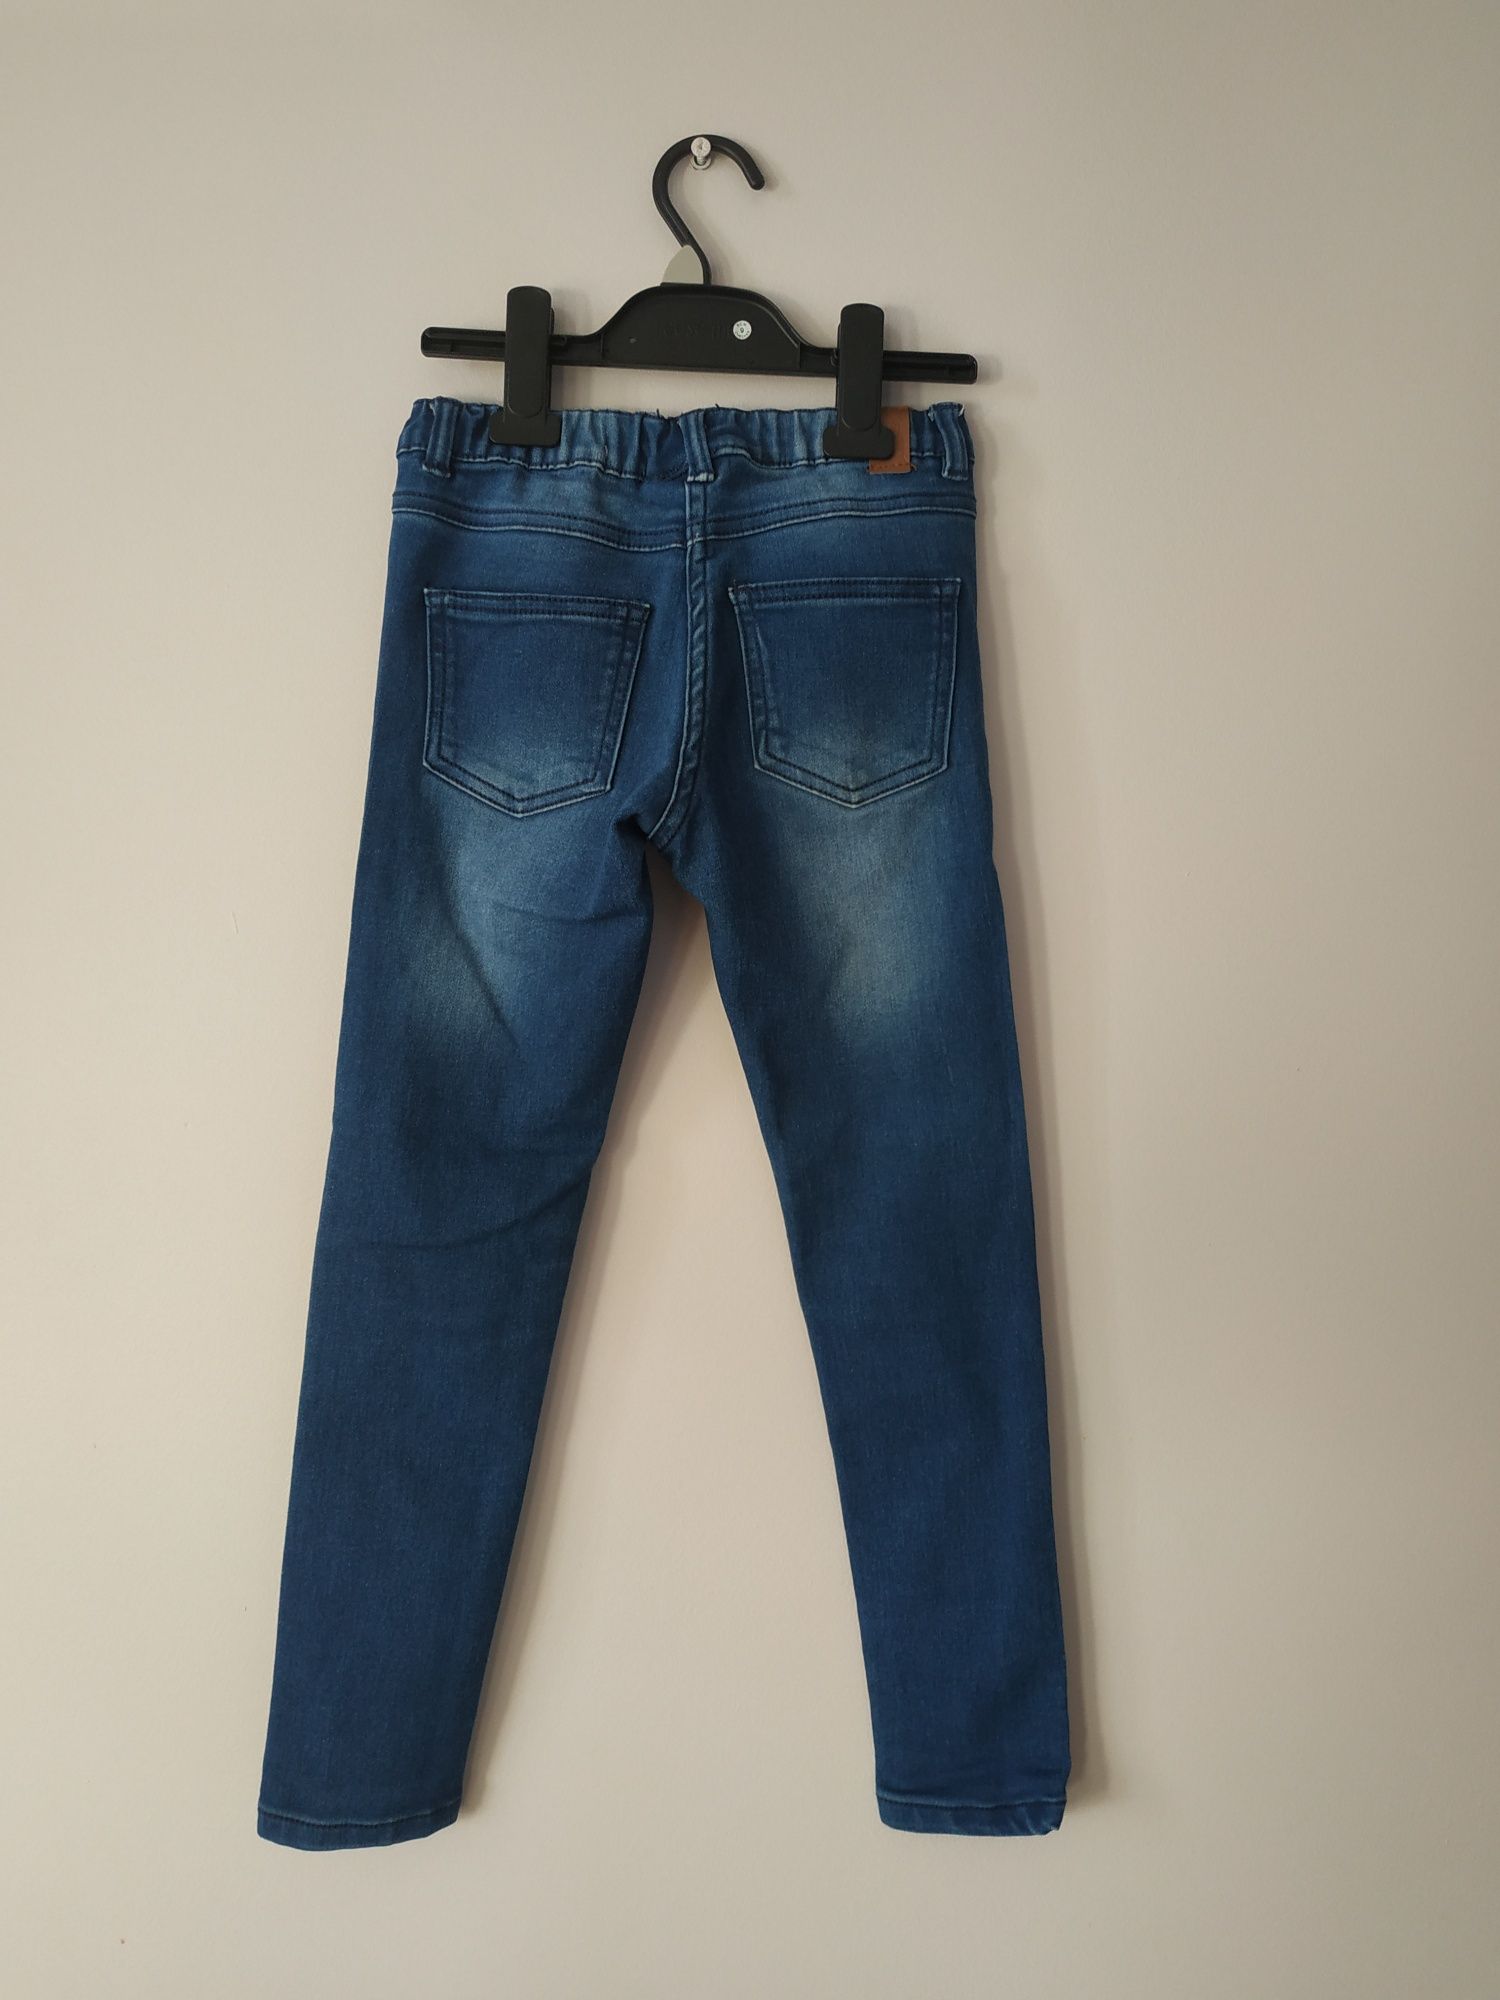 Spodnie jeansy na gumce, tregginsy skiny z lampasami r. 128